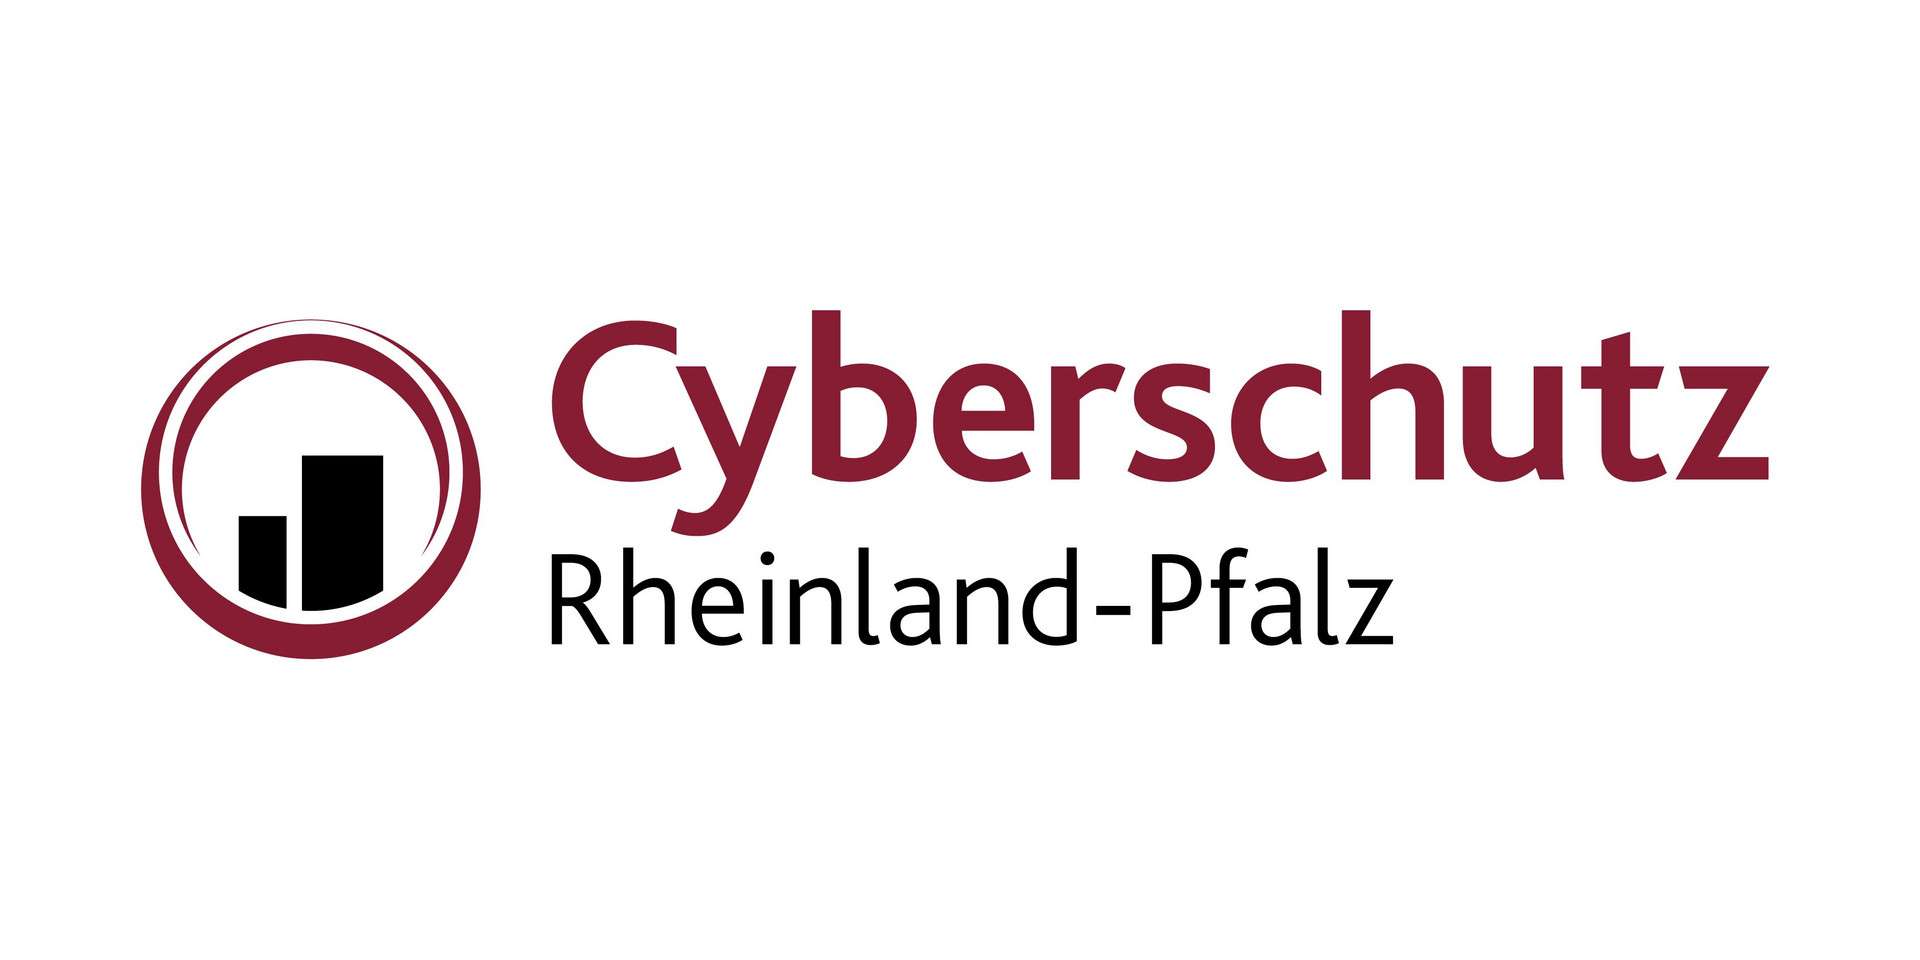 Cyberschutz Rheinland-Pfalz Logo 